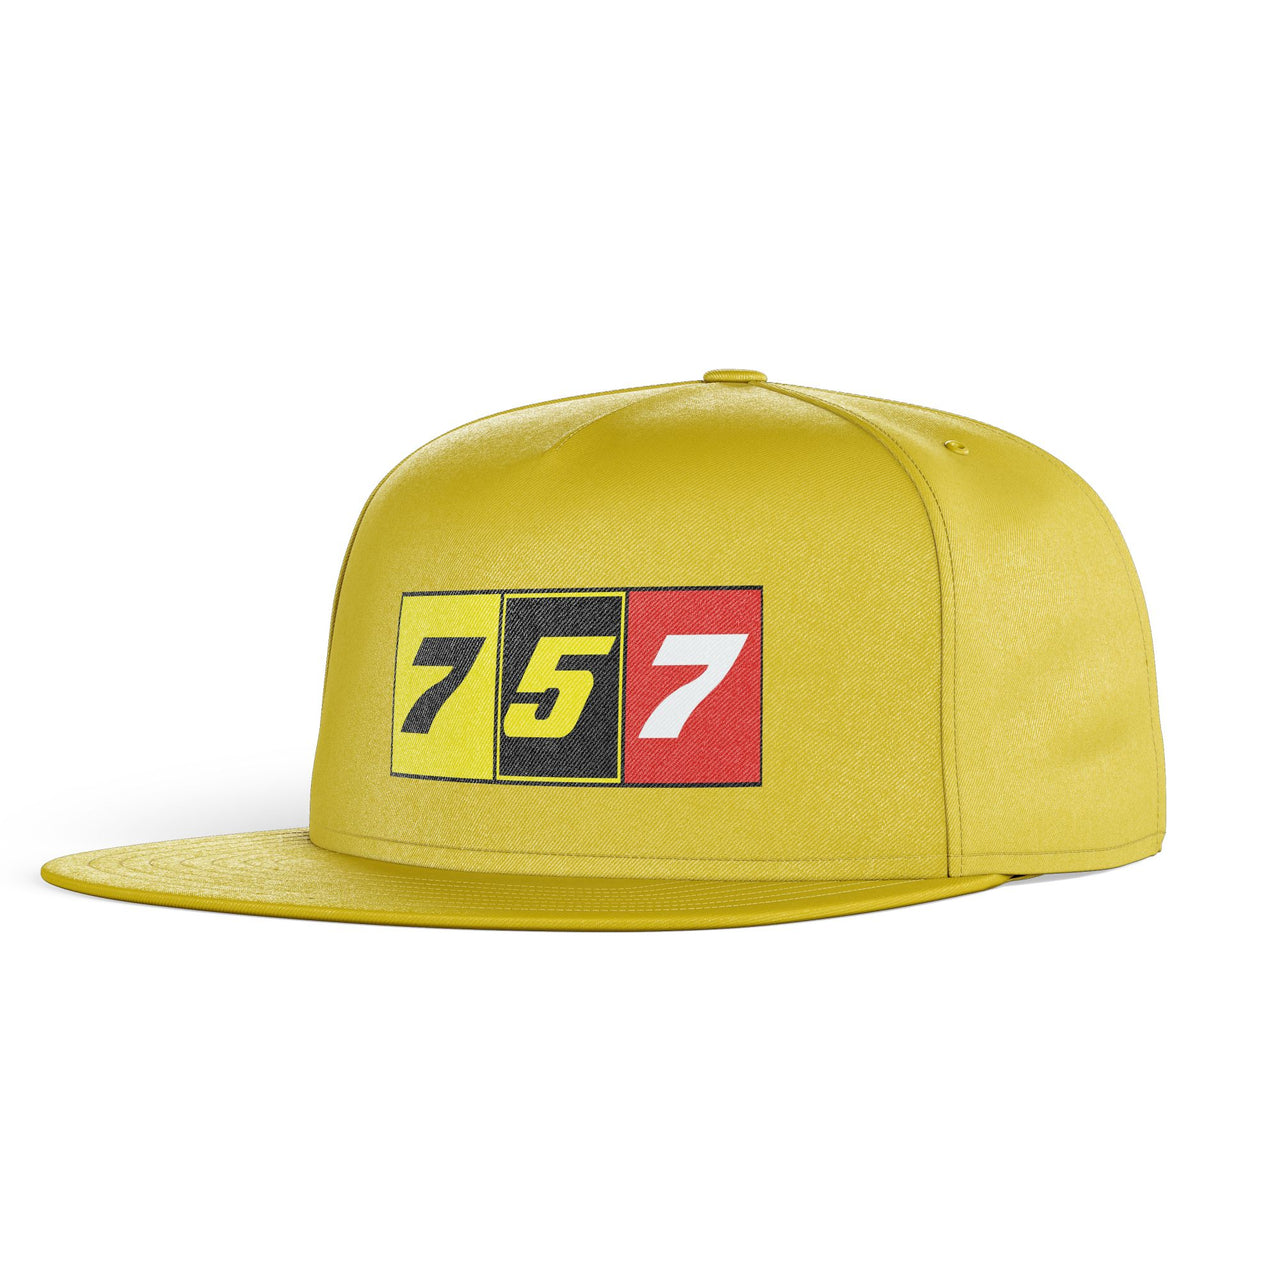 Flat Colourful 757 Designed Snapback Caps & Hats